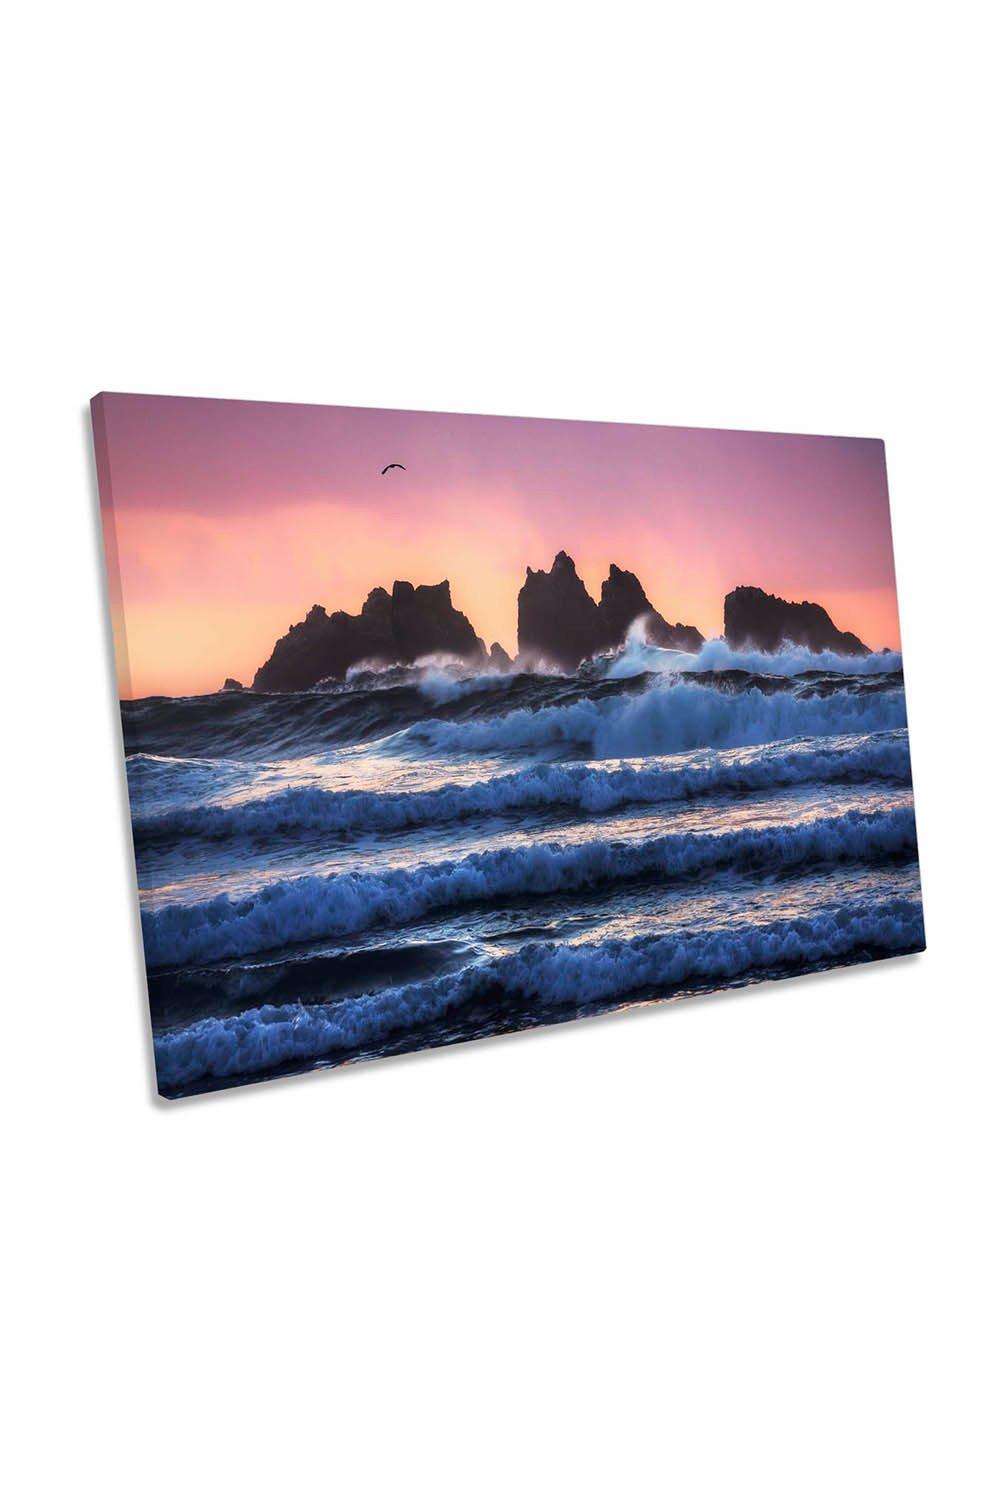 Bandon Beach Layers Beach Sunset Canvas Wall Art Picture Print